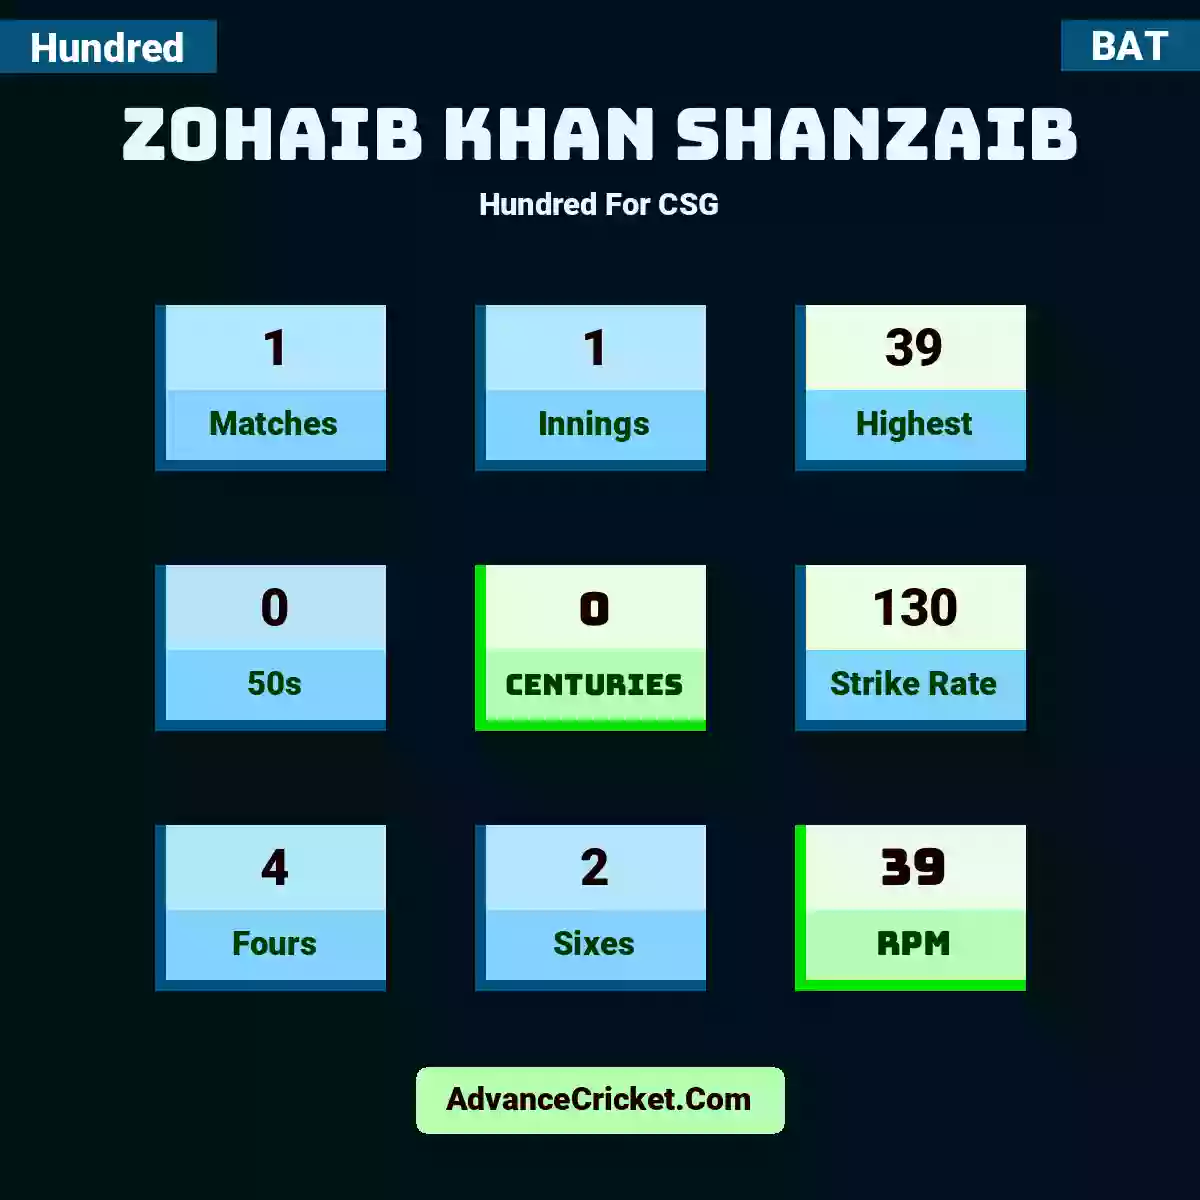 Zohaib Khan Shanzaib Hundred  For CSG, Zohaib Khan Shanzaib played 1 matches, scored 39 runs as highest, 0 half-centuries, and 0 centuries, with a strike rate of 130. Z.Khan.Shanzaib hit 4 fours and 2 sixes, with an RPM of 39.